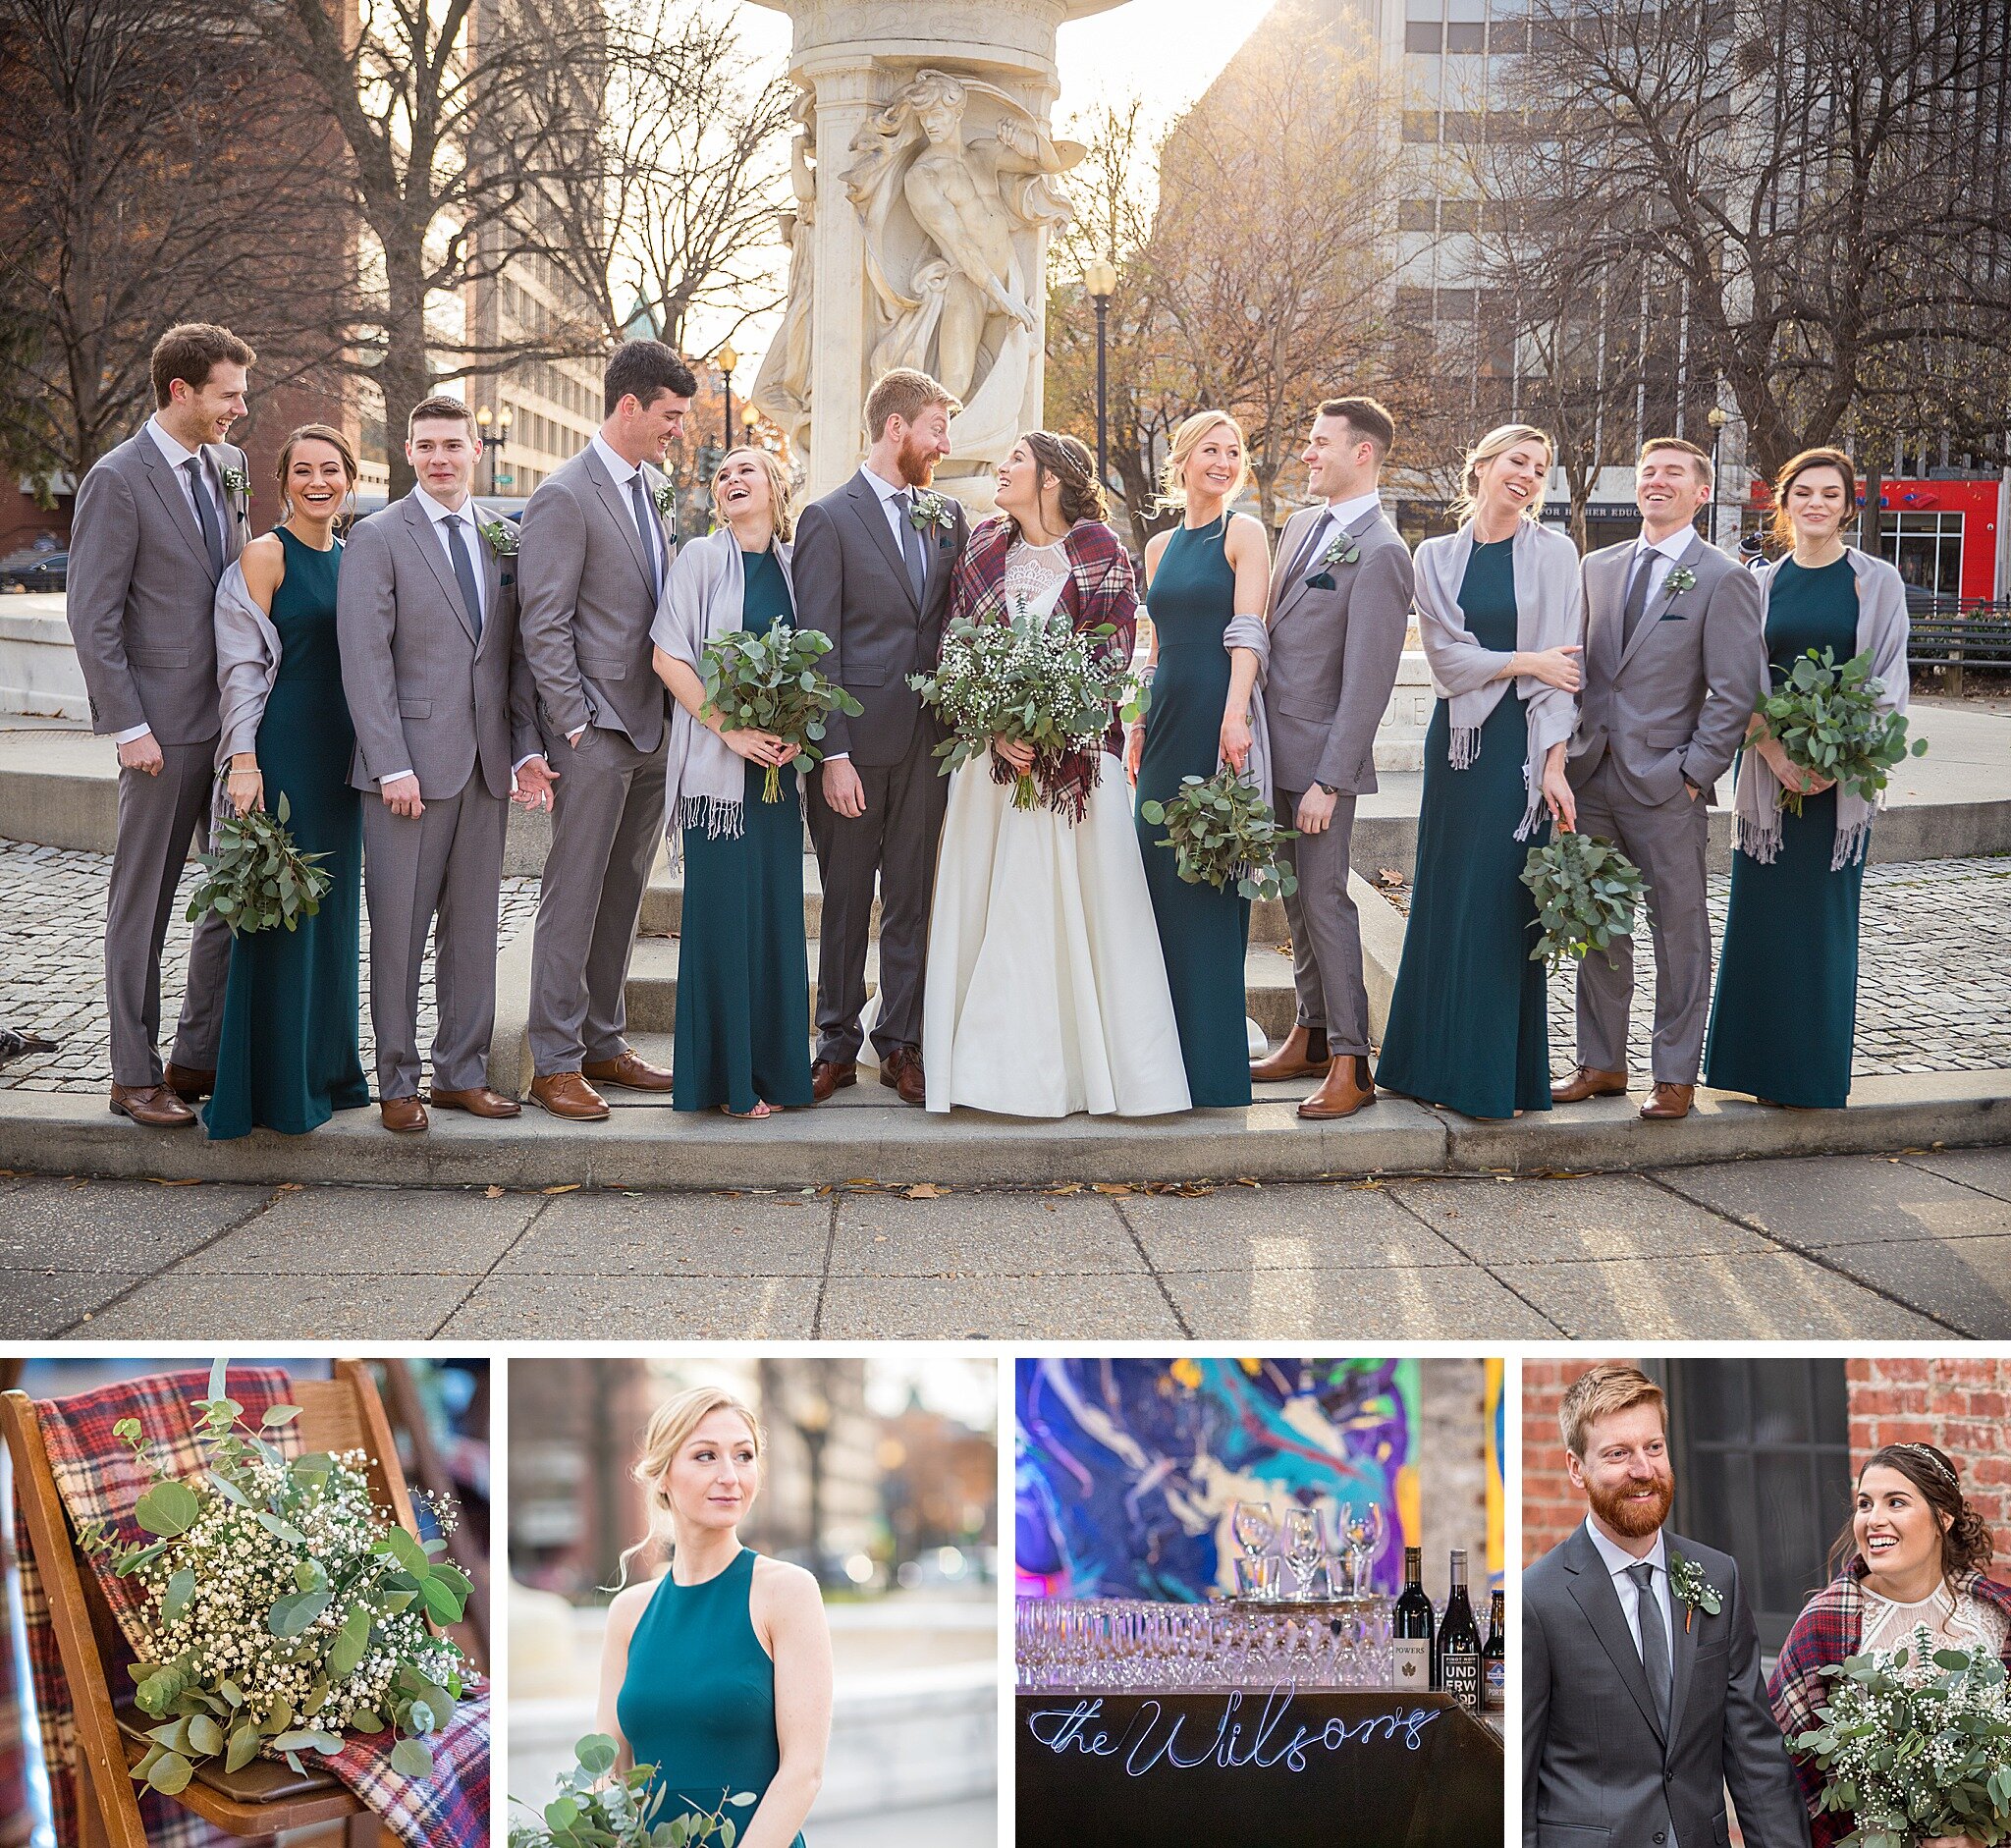 Washingtonian on Instagram: EXCLUSIVE LOOK: Inside the wedding of